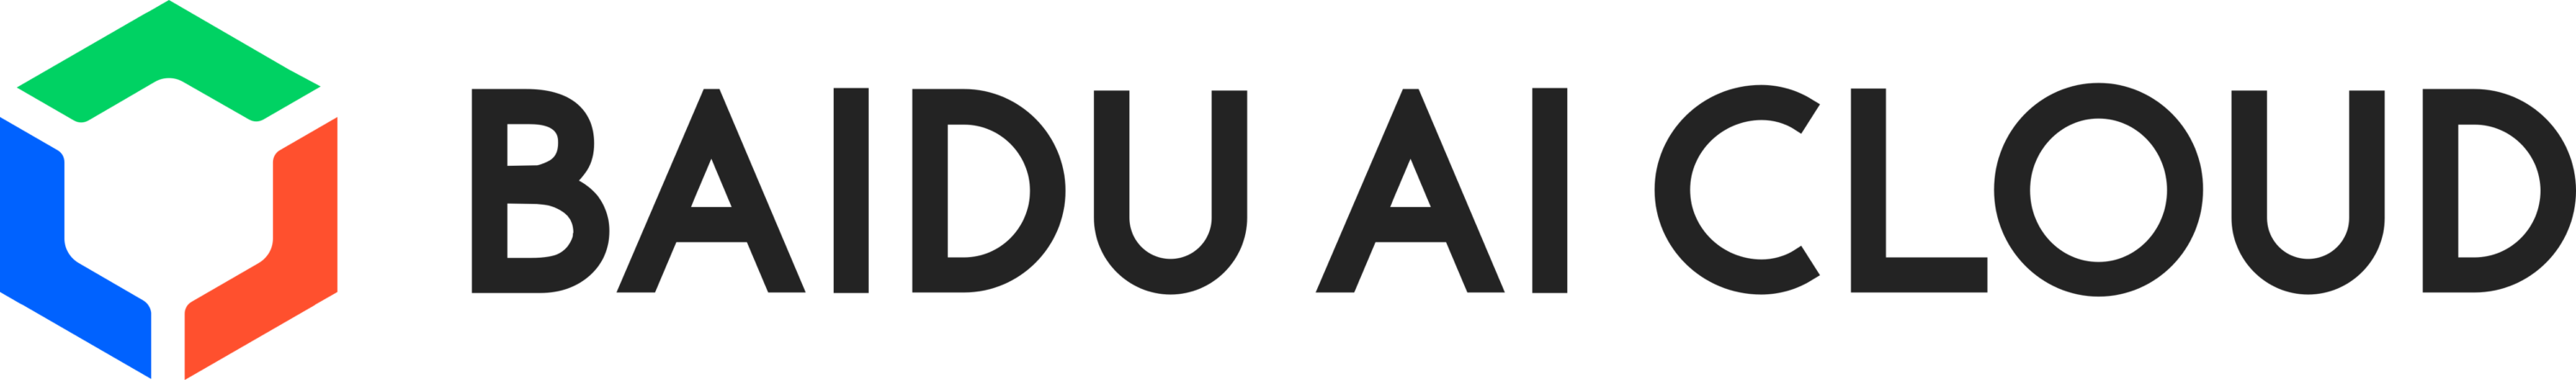 Baidu Ai Cloud Logo